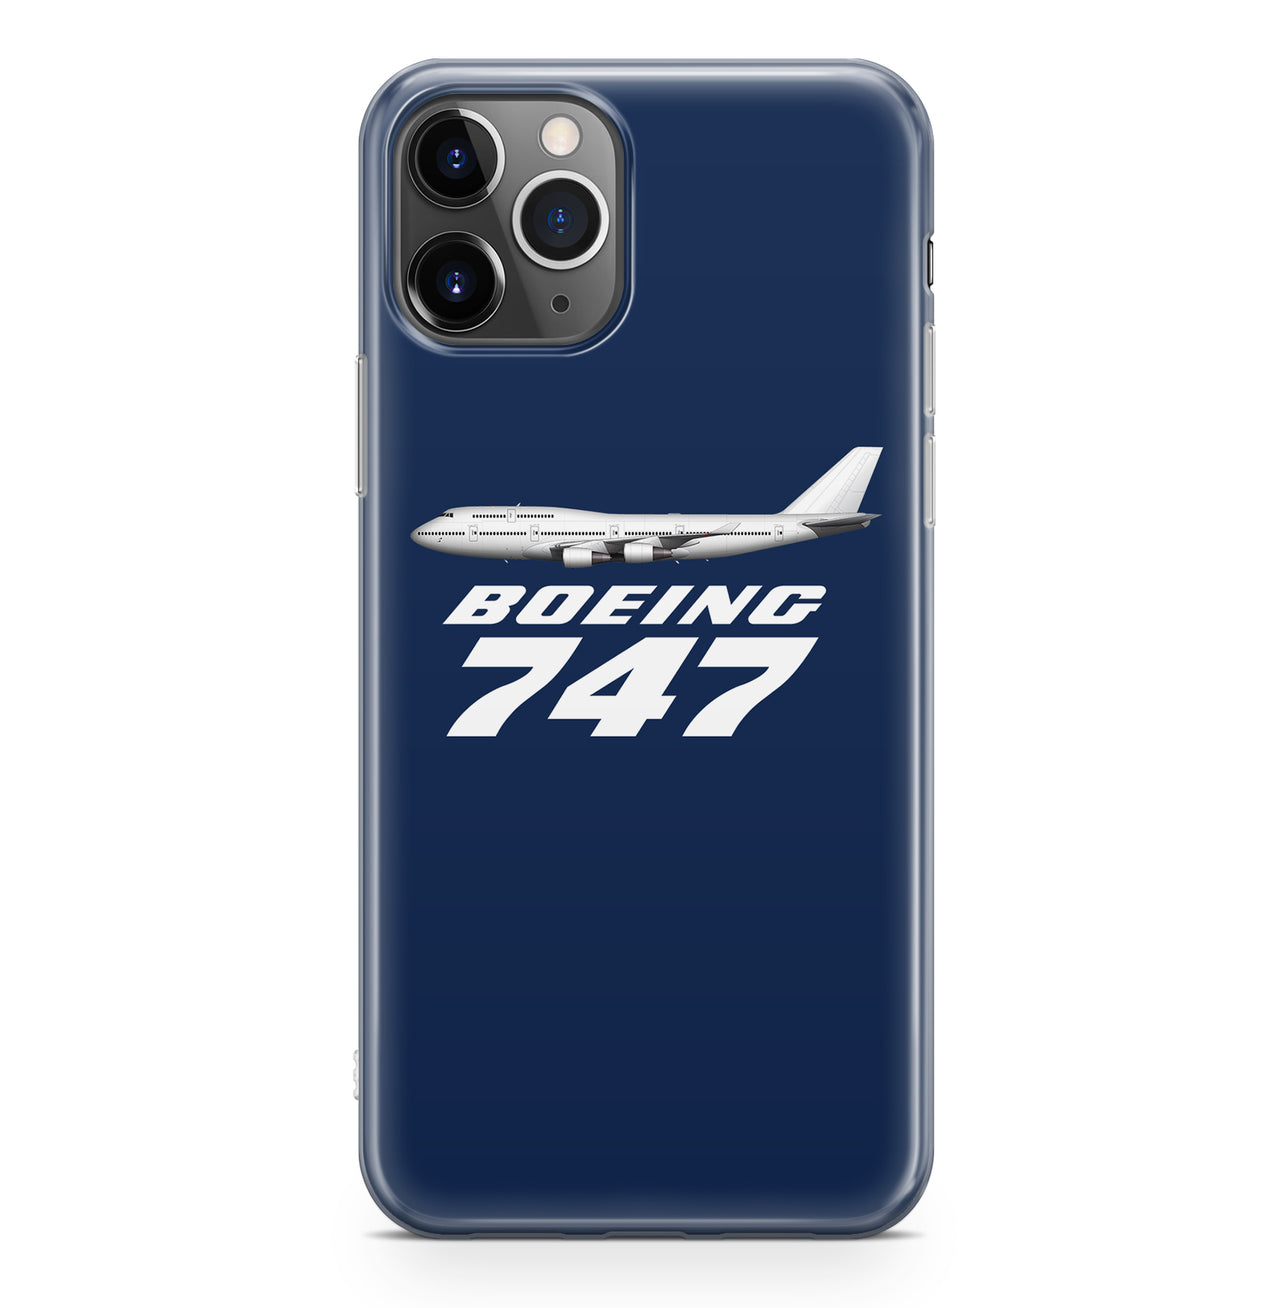 The Boeing 747 Designed iPhone Cases